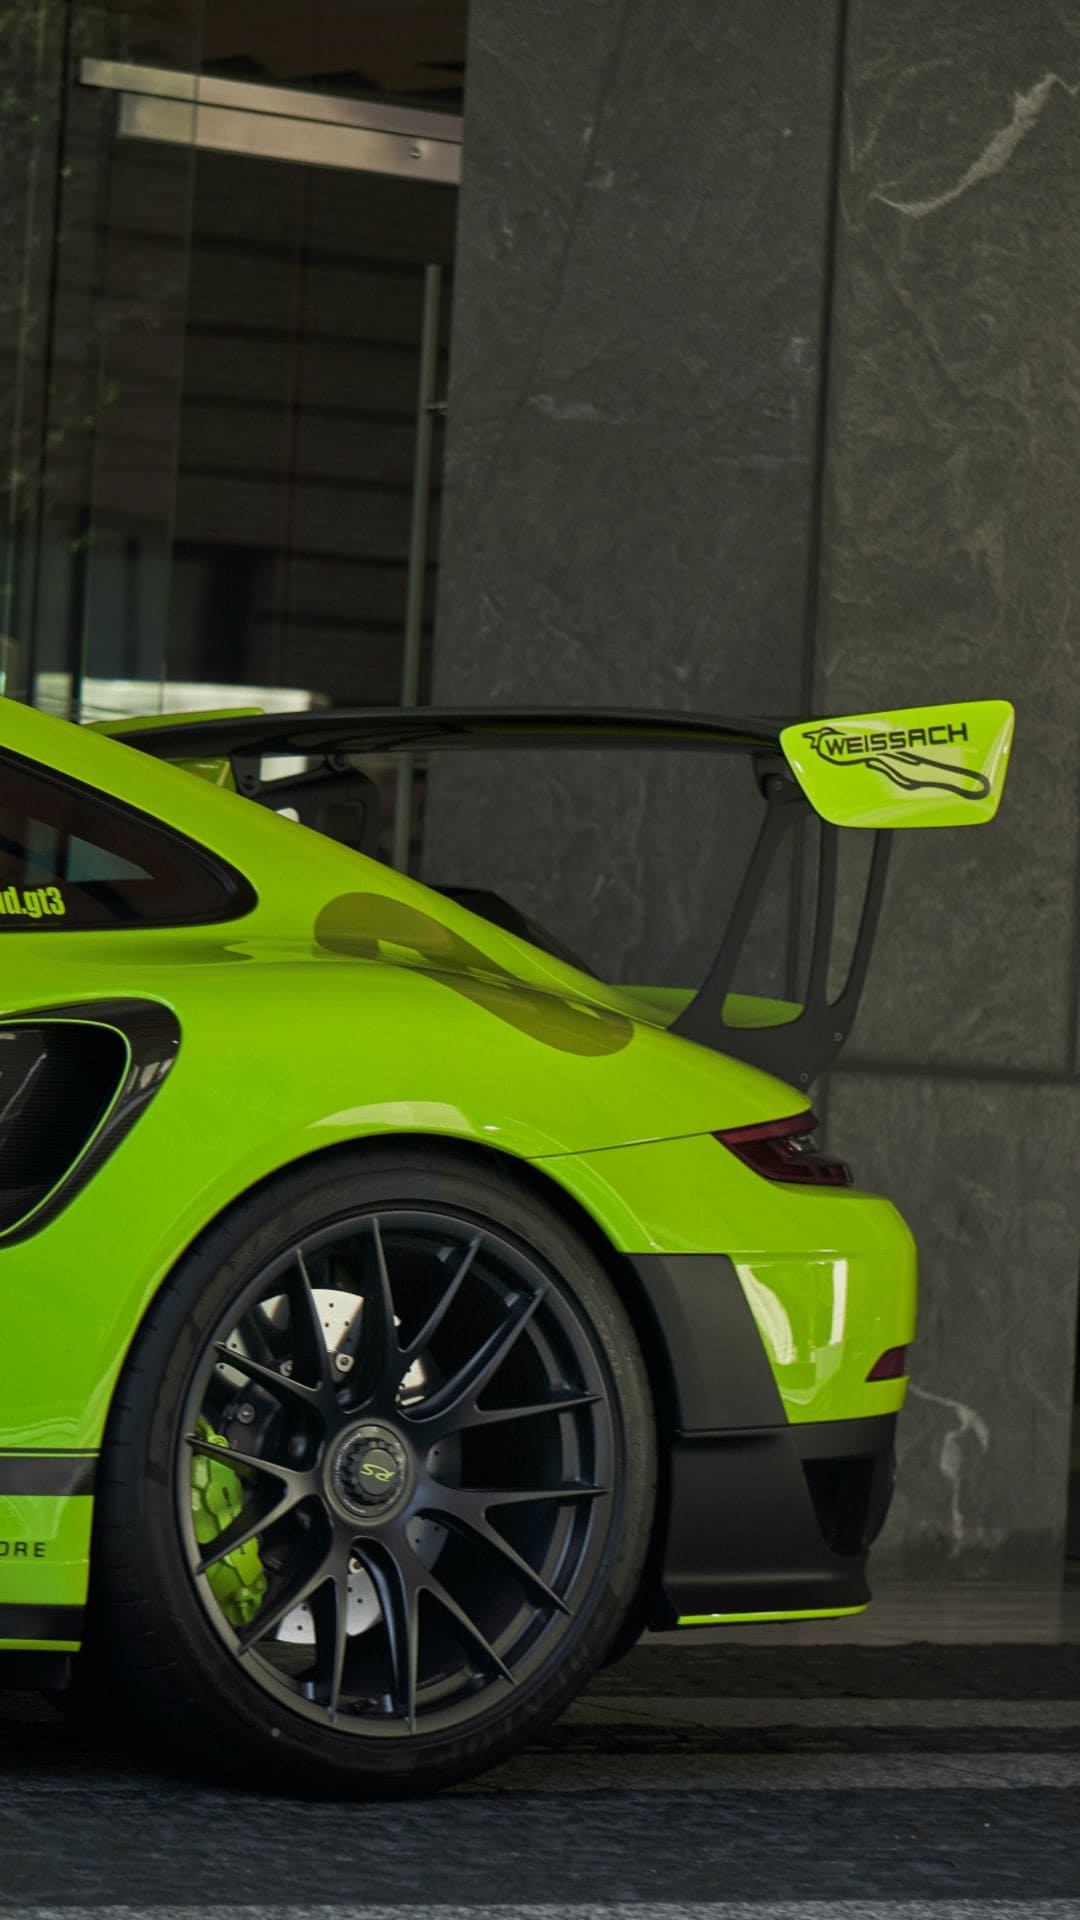 1080x1920 Porsche Wallpapers Top 35 Best Porsche Cars Backgrounds Download